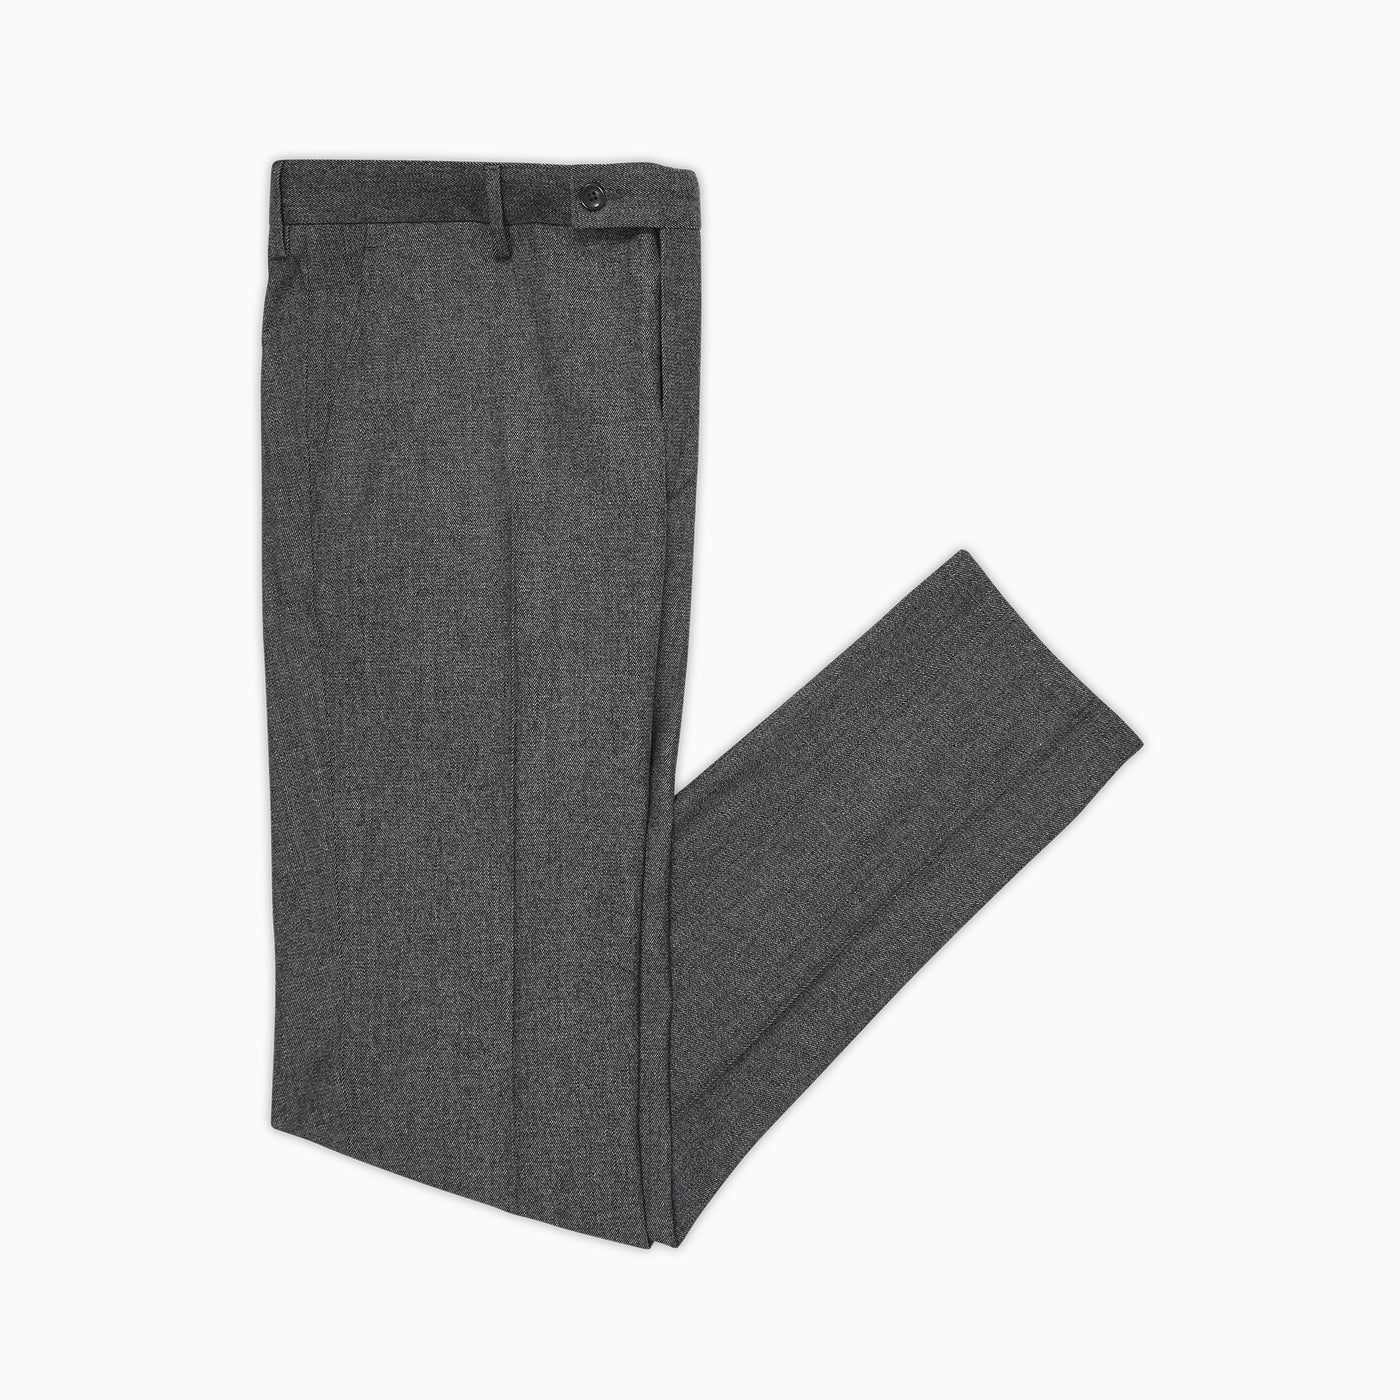 Boris Chino Denim Pants Cotton and Wool Stretch (charcoal)